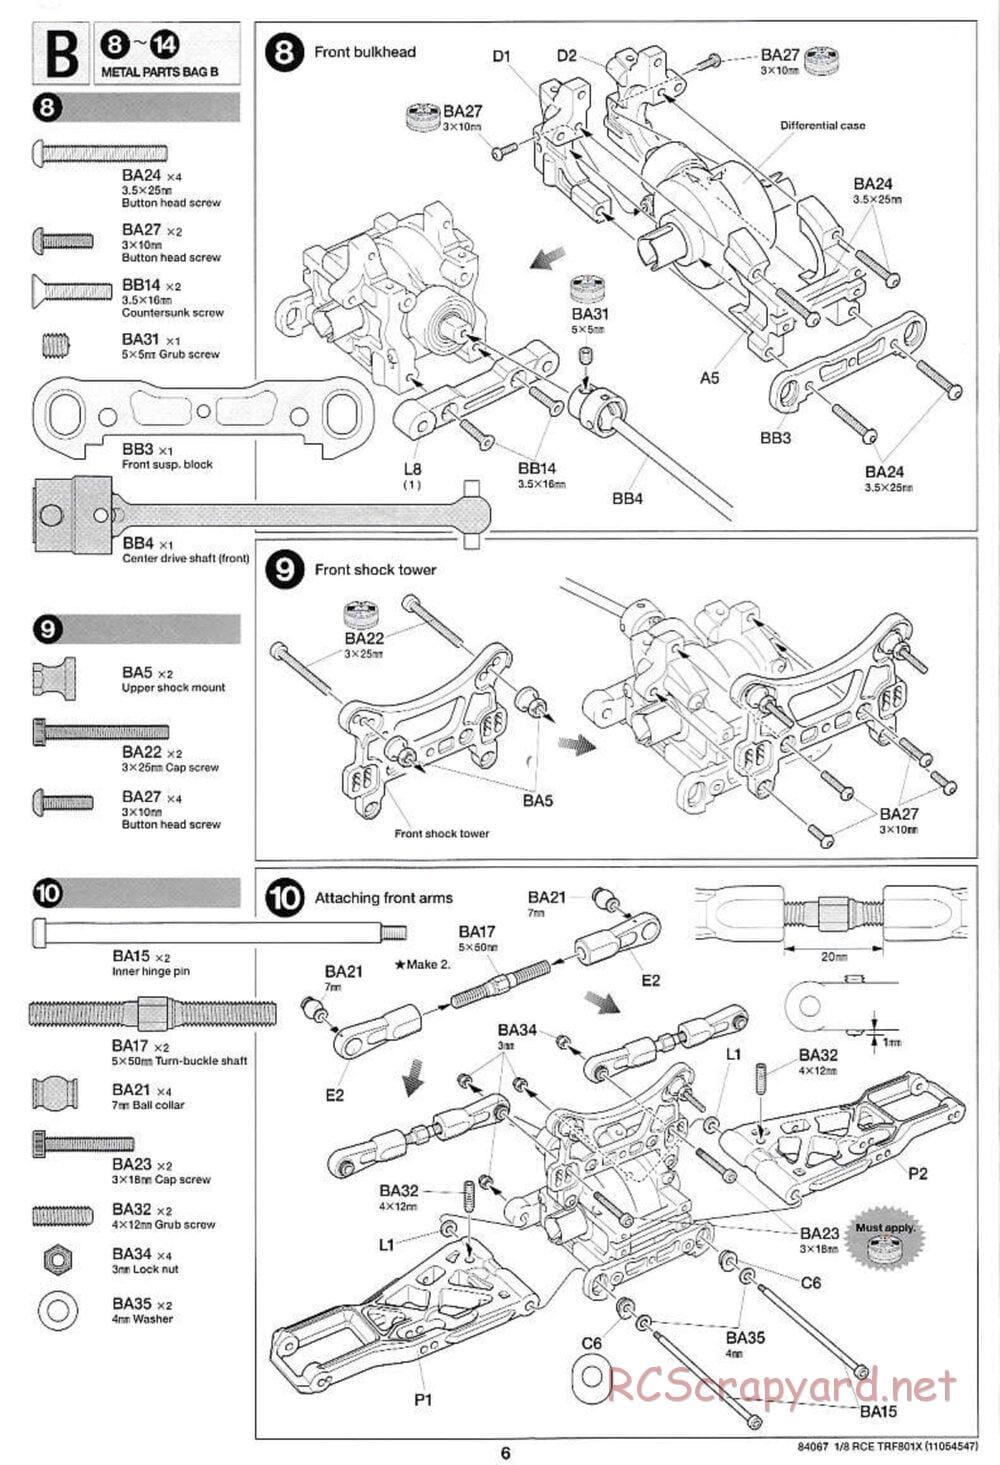 Tamiya - TRF801X Chassis - Manual - Page 6